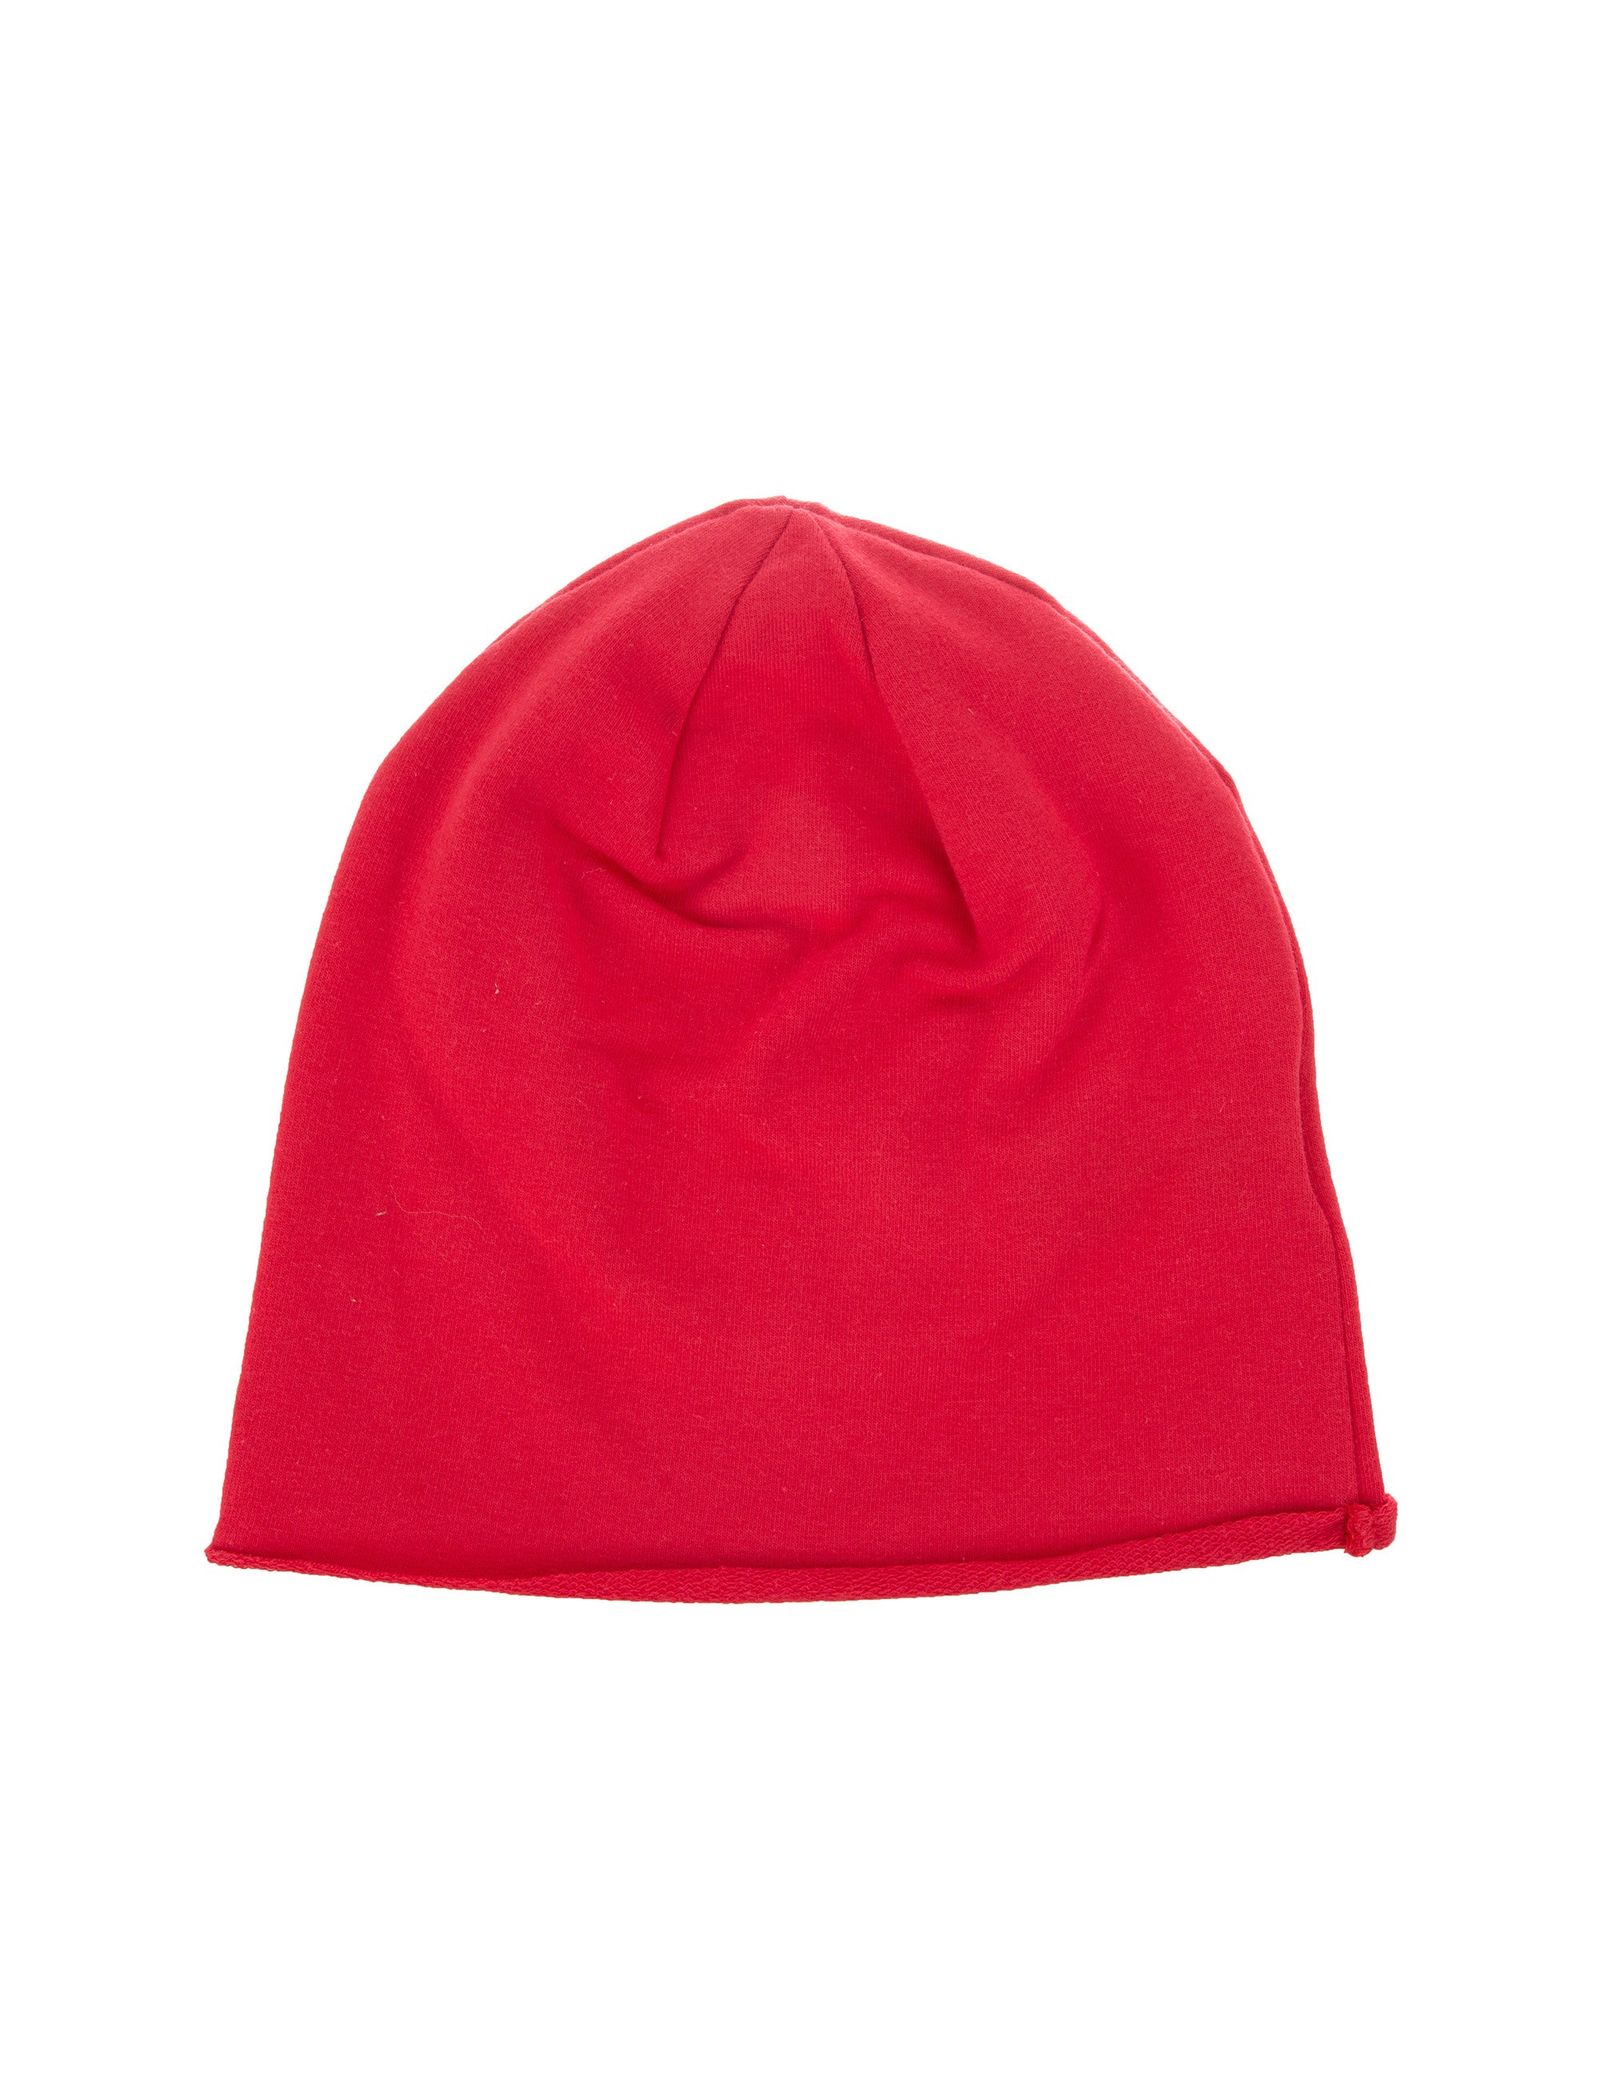 کلاه نخی بانی نوزادی پسرانه - بلوکیدز - قرمز - 1